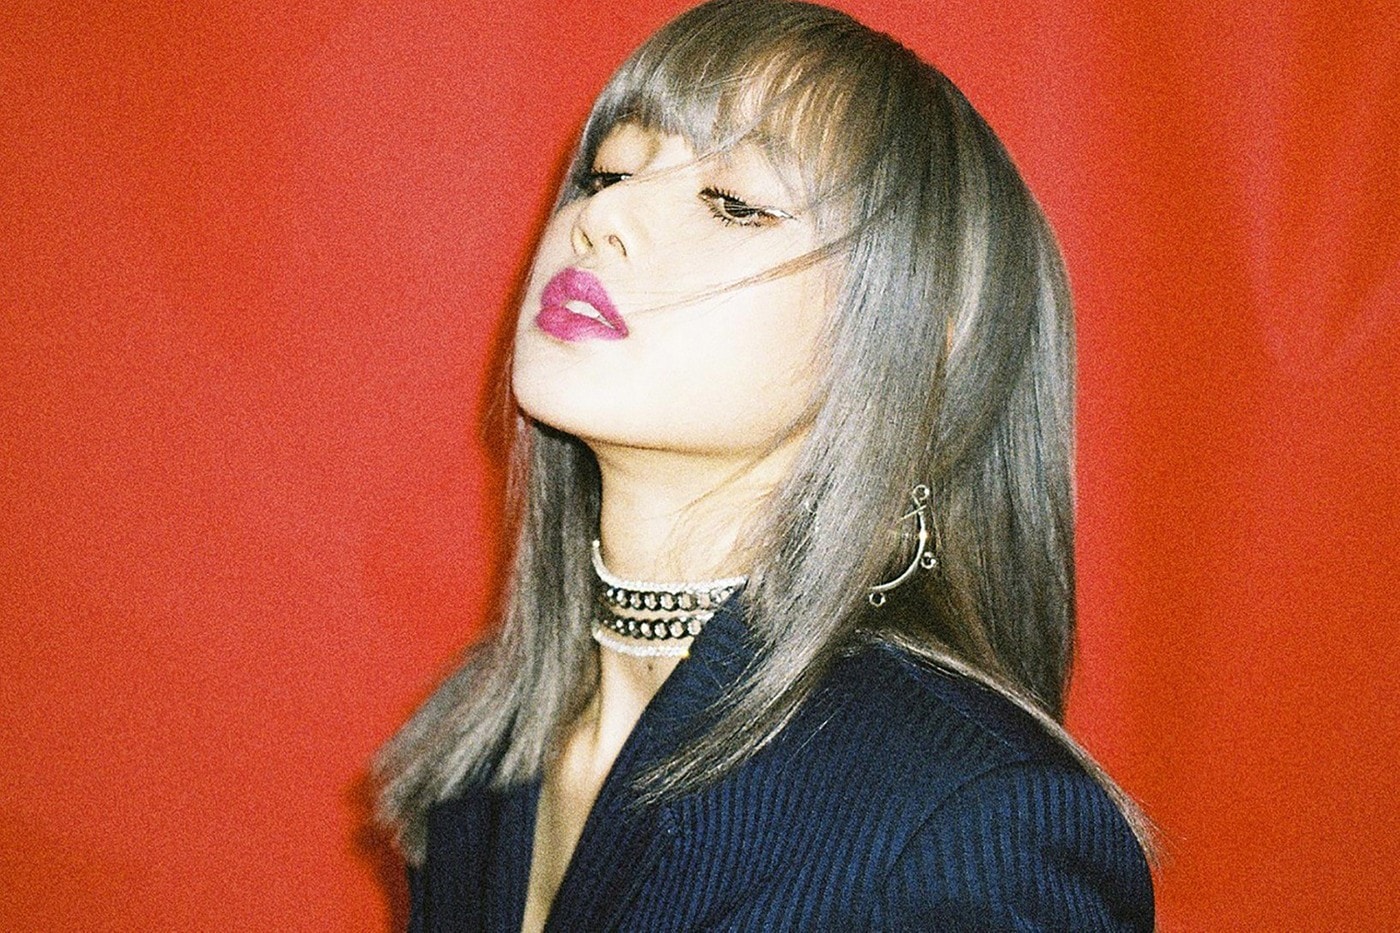 YG Entertainment 證實 BLACKPINK 成員 Lisa 個人 Solo 單曲即將發佈